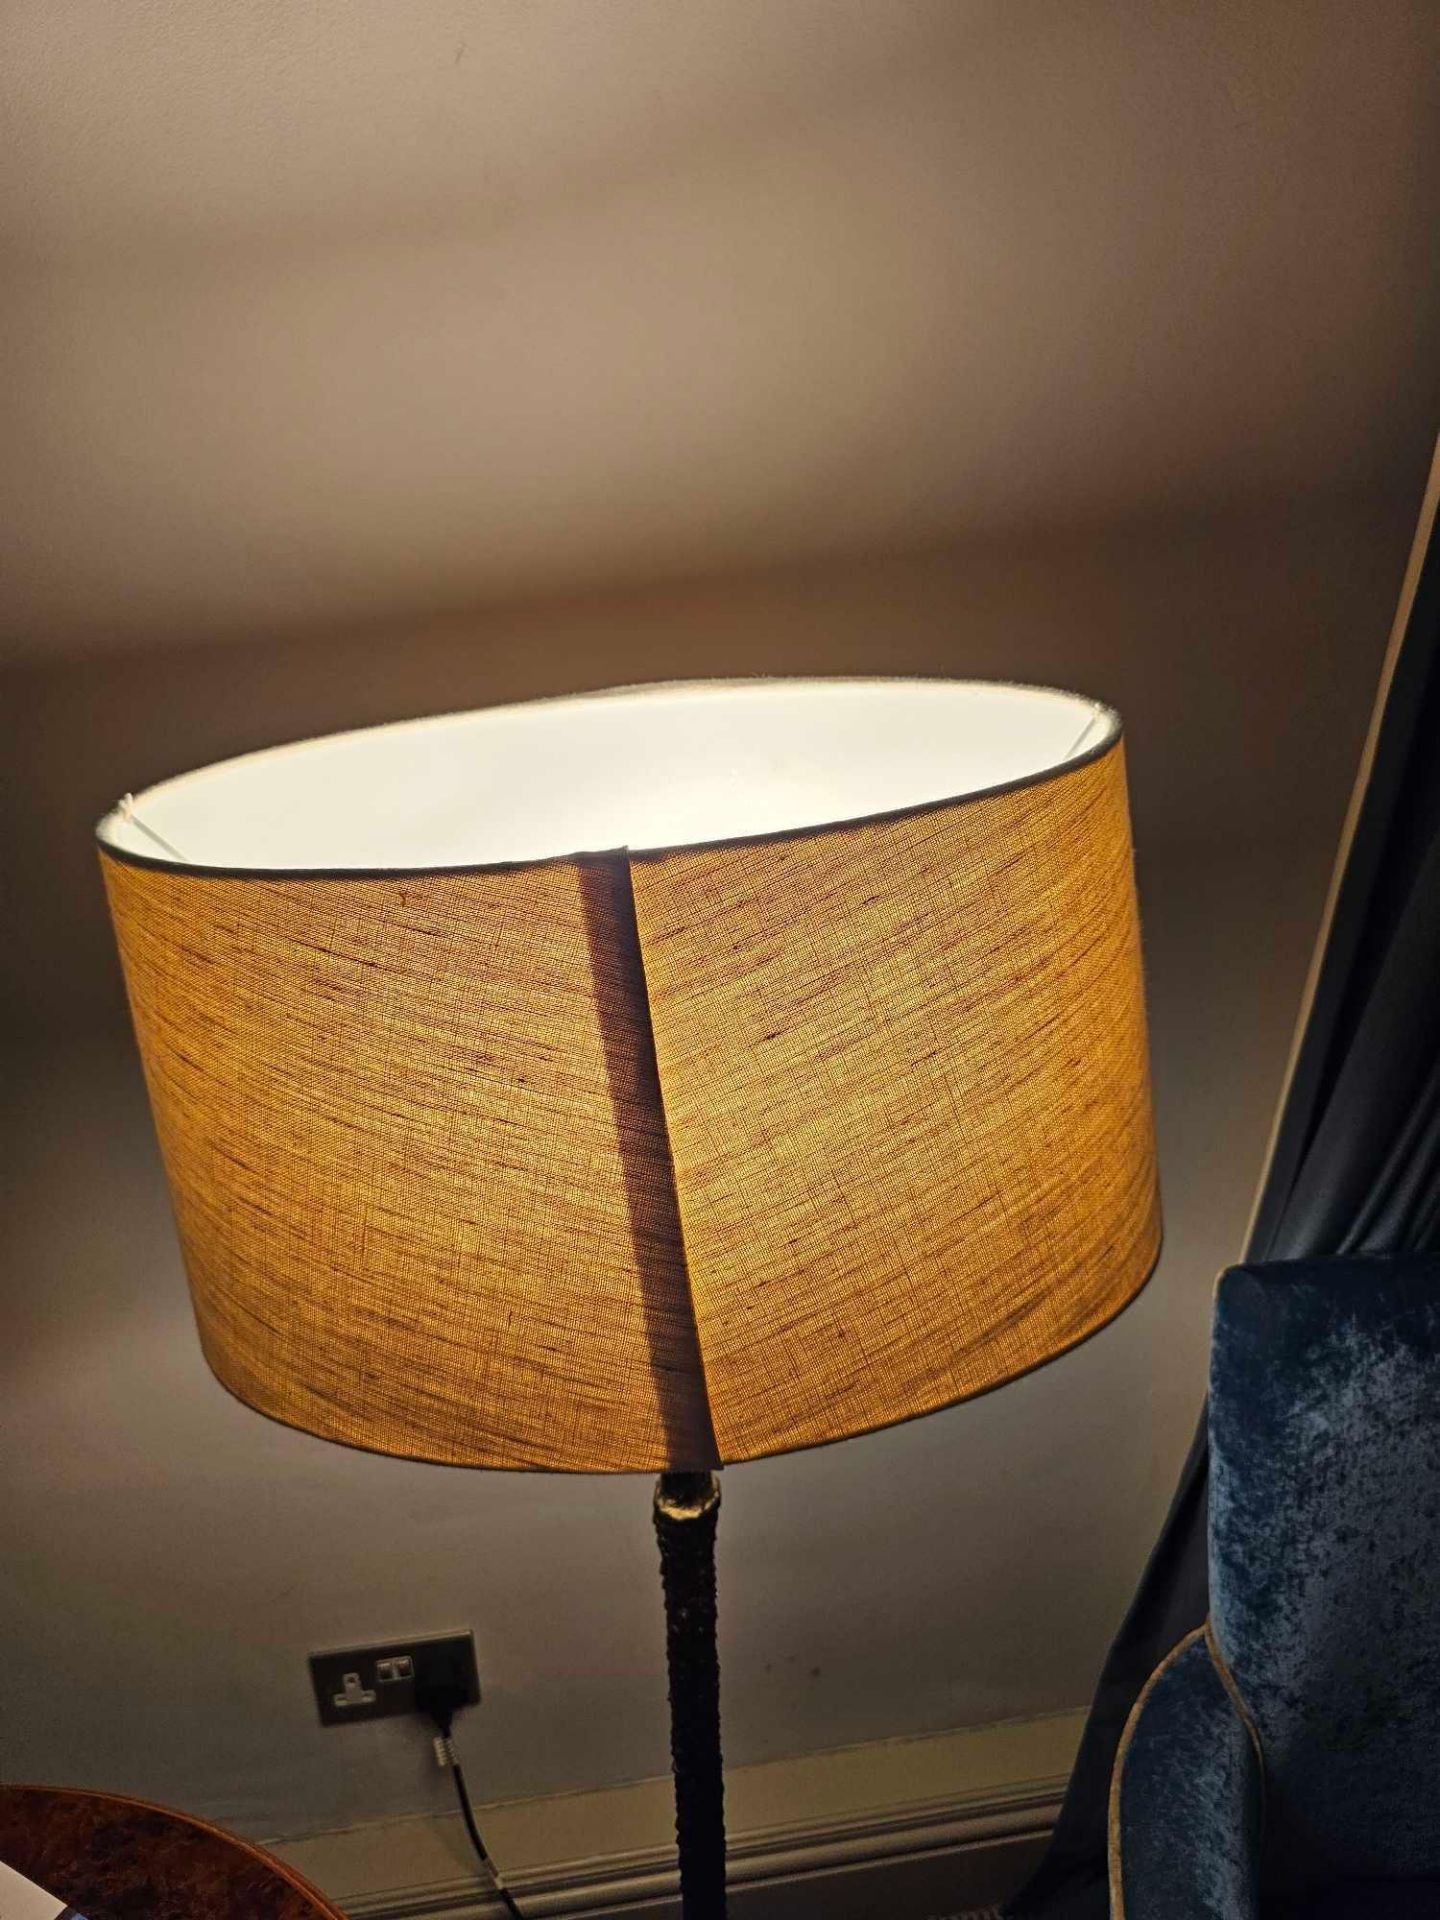 Heathfield & Co Brass Short Height Floor Lamp With Shade 127cm Tall (Loc: Room 131) - Image 3 of 3